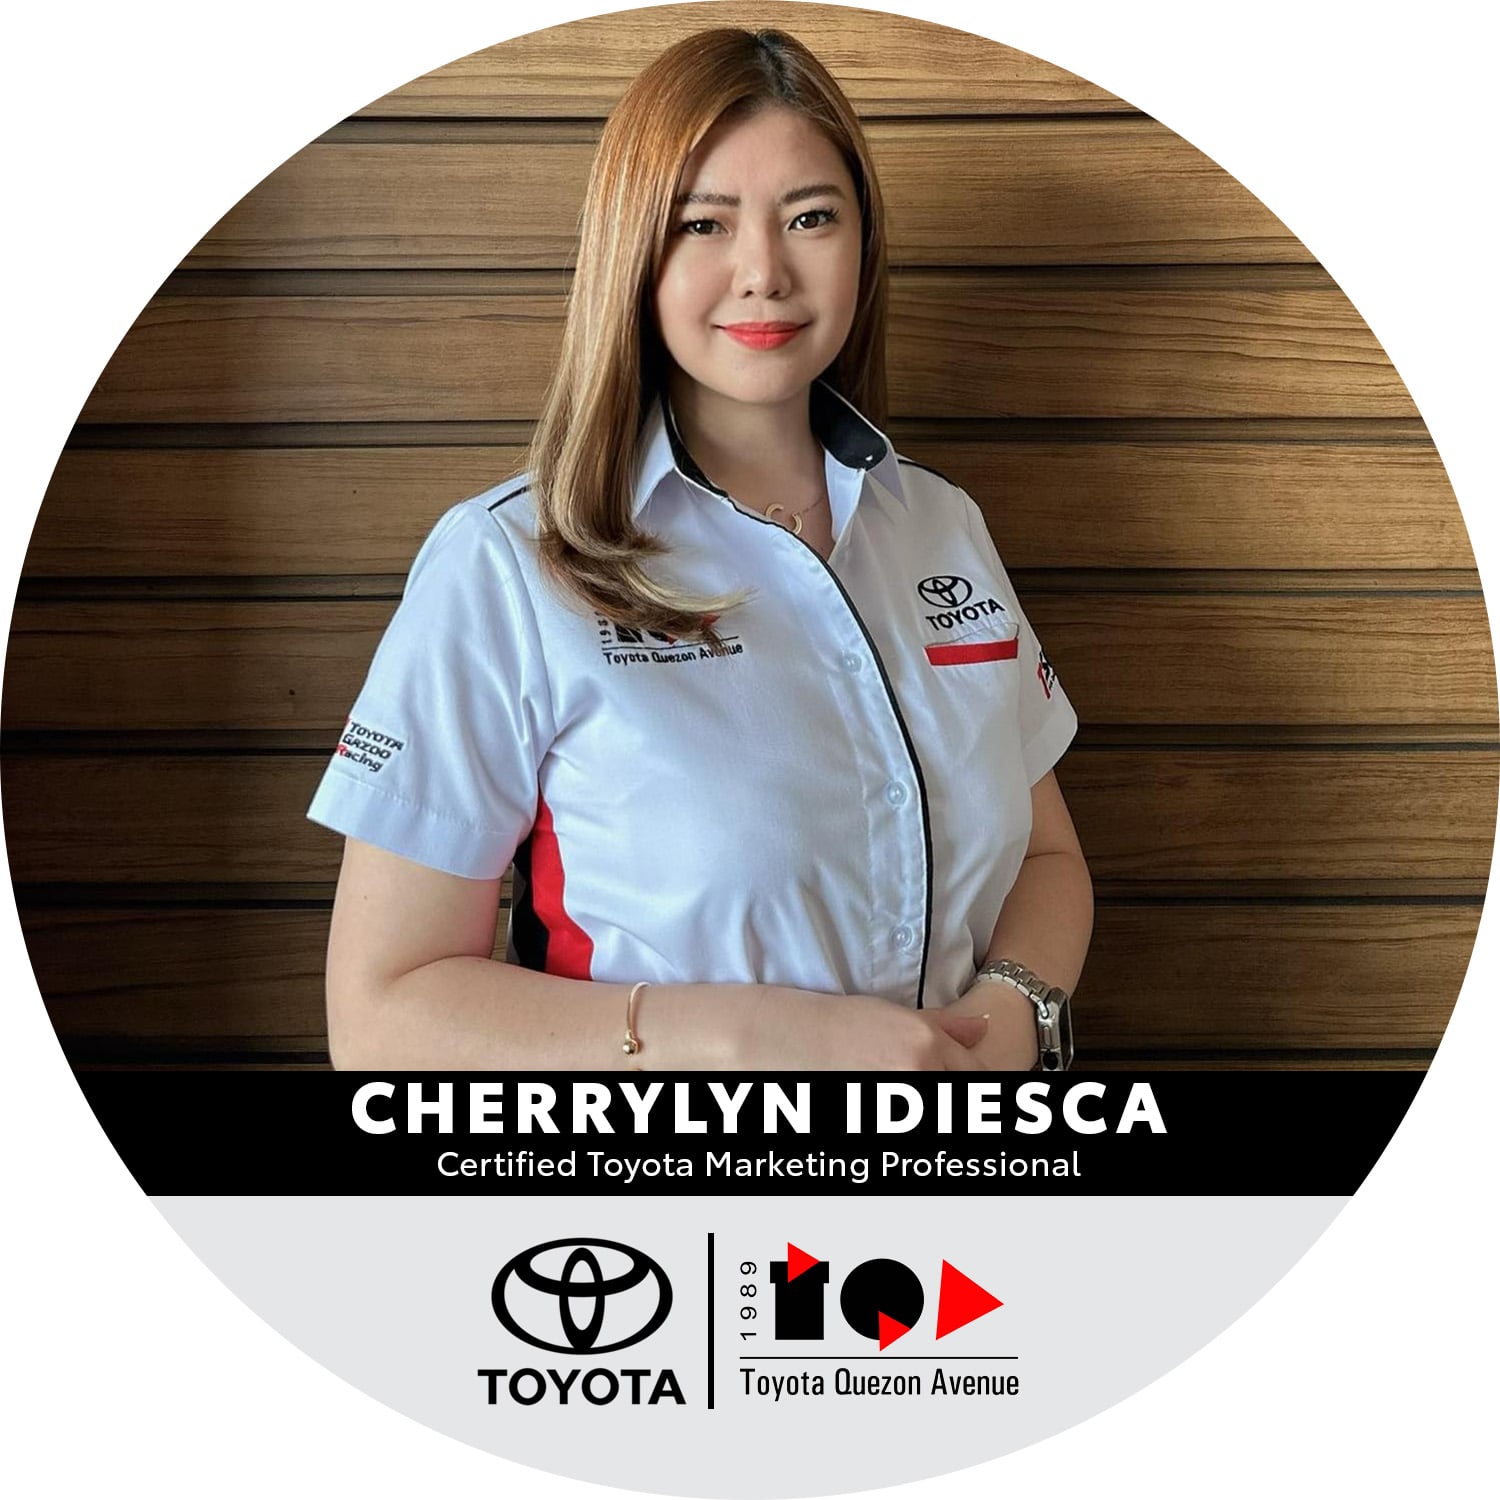 Certified Toyota Marketing Professionals - Cherrylyn Idiesca